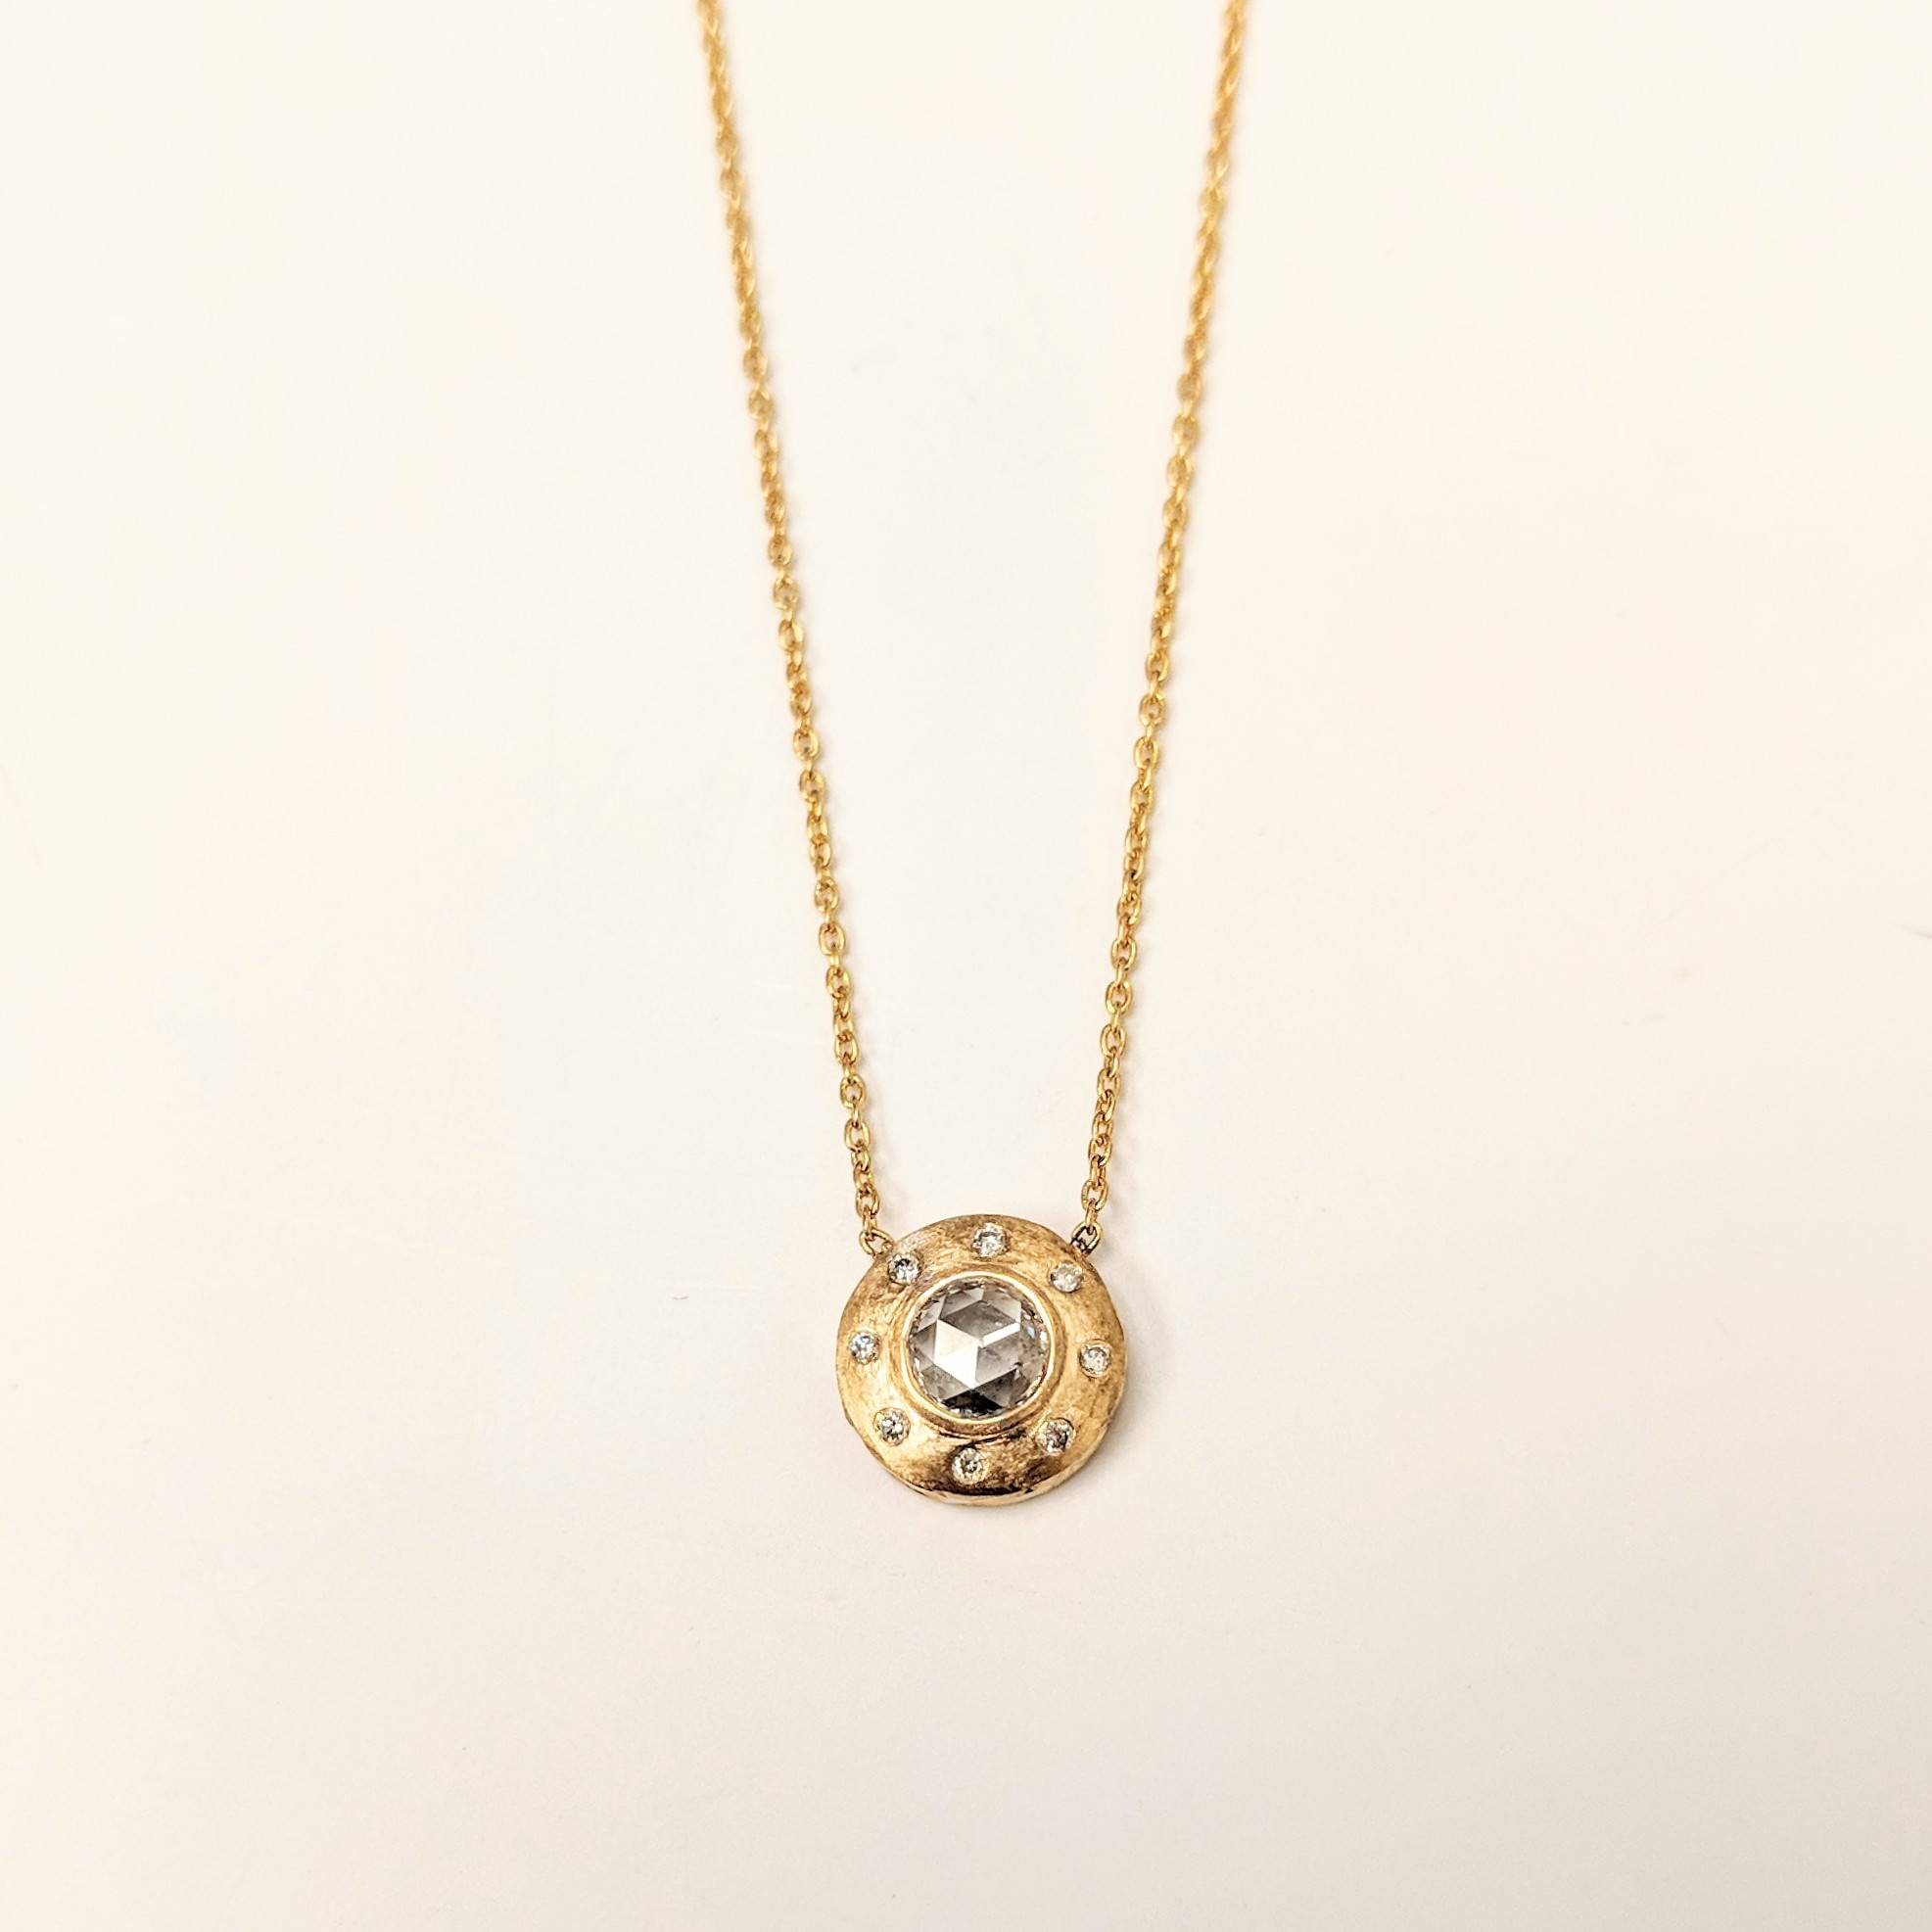 Beautiful rose quartz pendant designer Rosecut pave diamond pendant 925 sterling silver handmade finish diamond charms necklace pendant